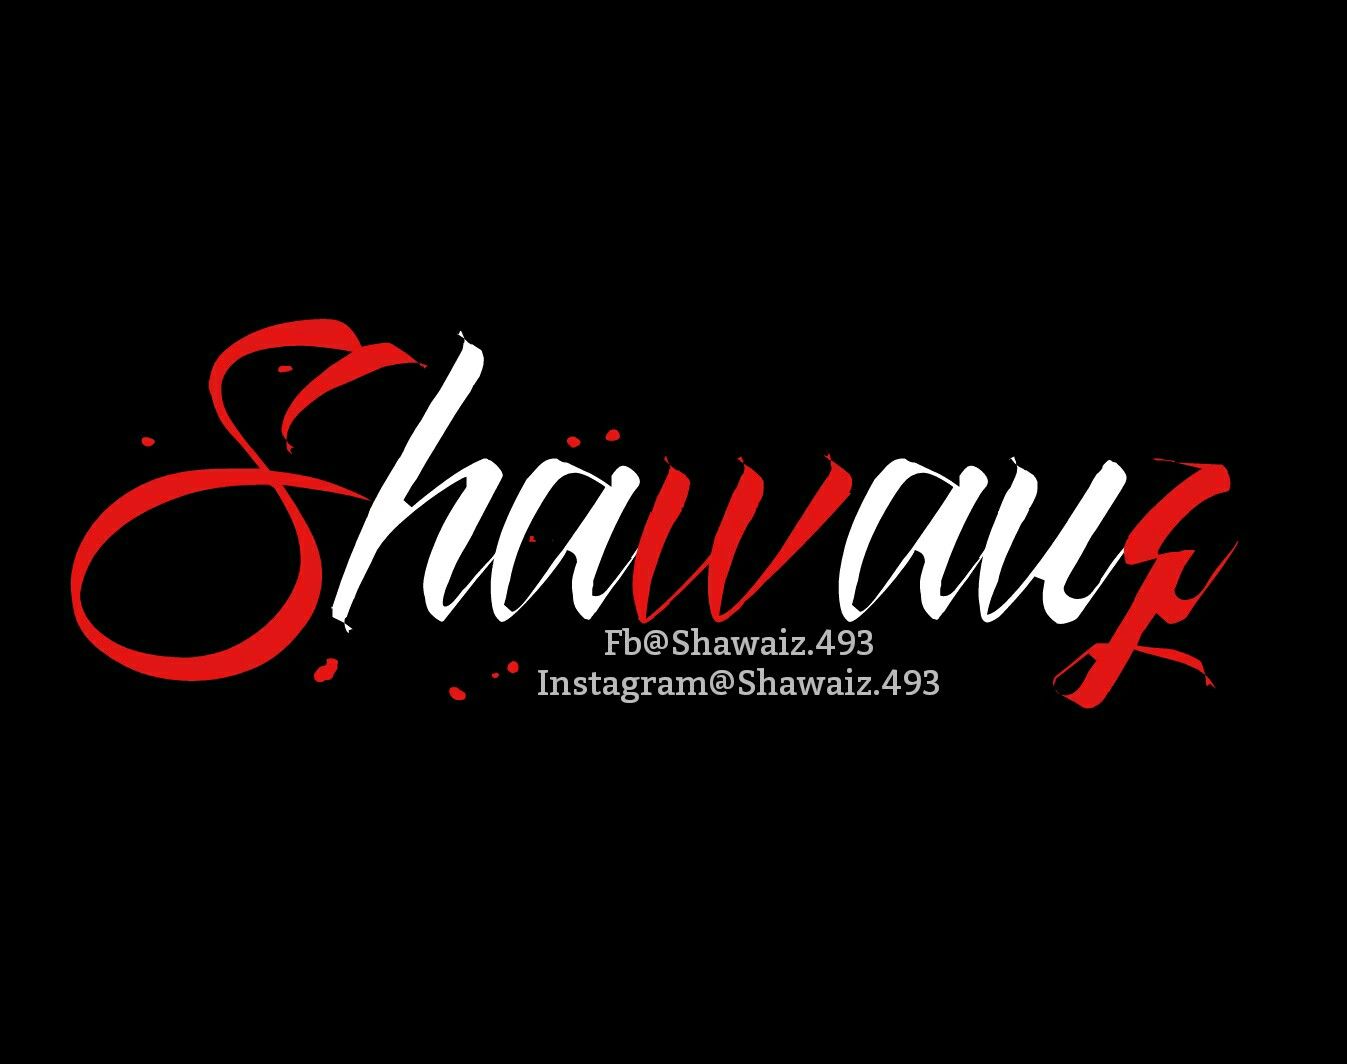 Shawaiz Name In Balck Paper 😍 - Graphic Design , HD Wallpaper & Backgrounds